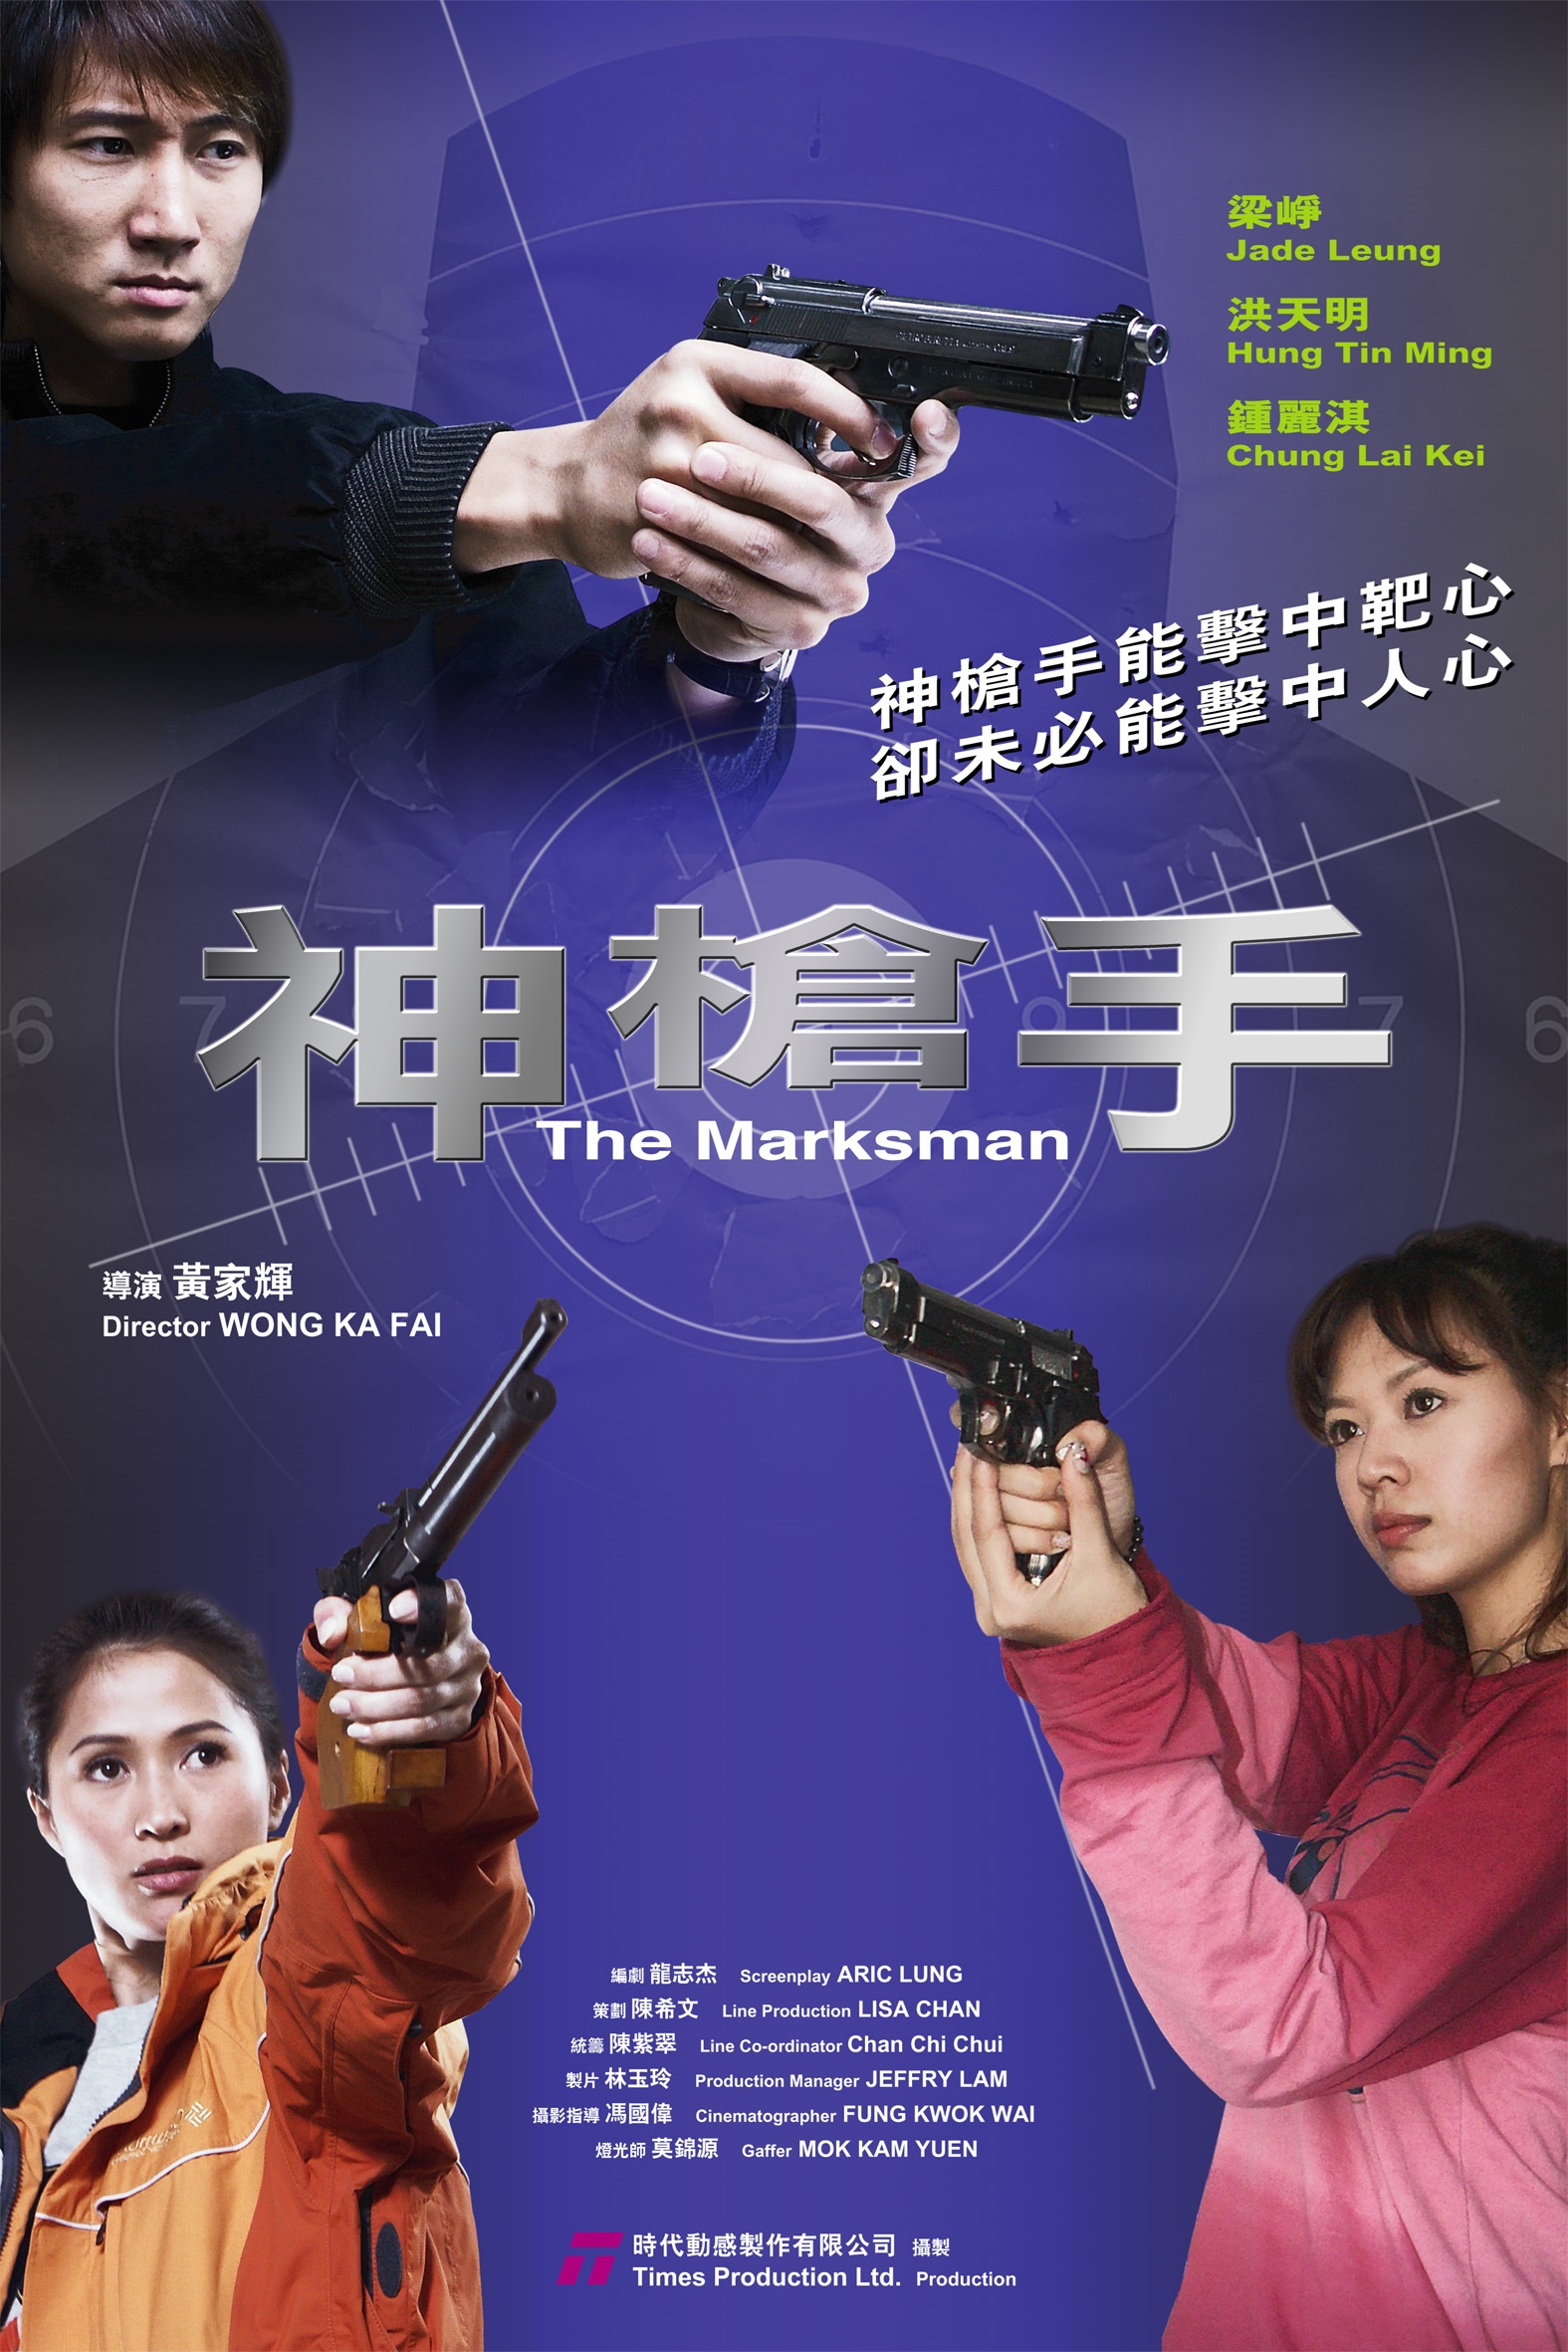 The Marksman - 2D/3D animation web TV series